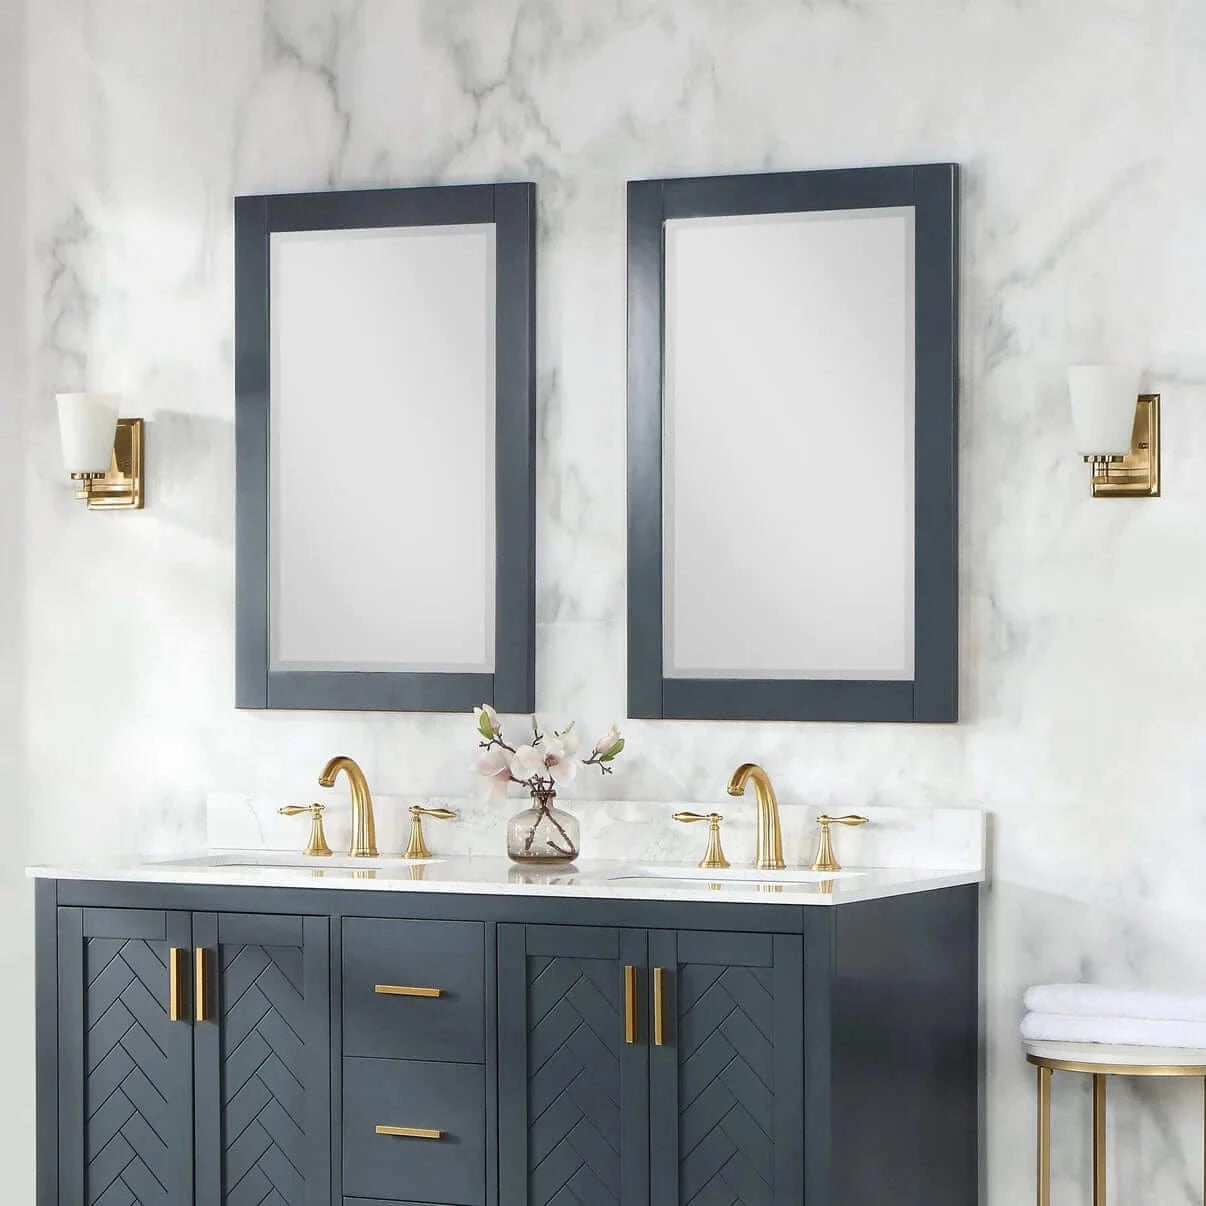 Altair Maribella 24" Rectangular Bathroom Wood Framed Wall Mirror Bathroom Mirror, Wall Mirror, Wood Framed Mirror, Mantle Mirror, Dresser Mirror Altair Design USA 